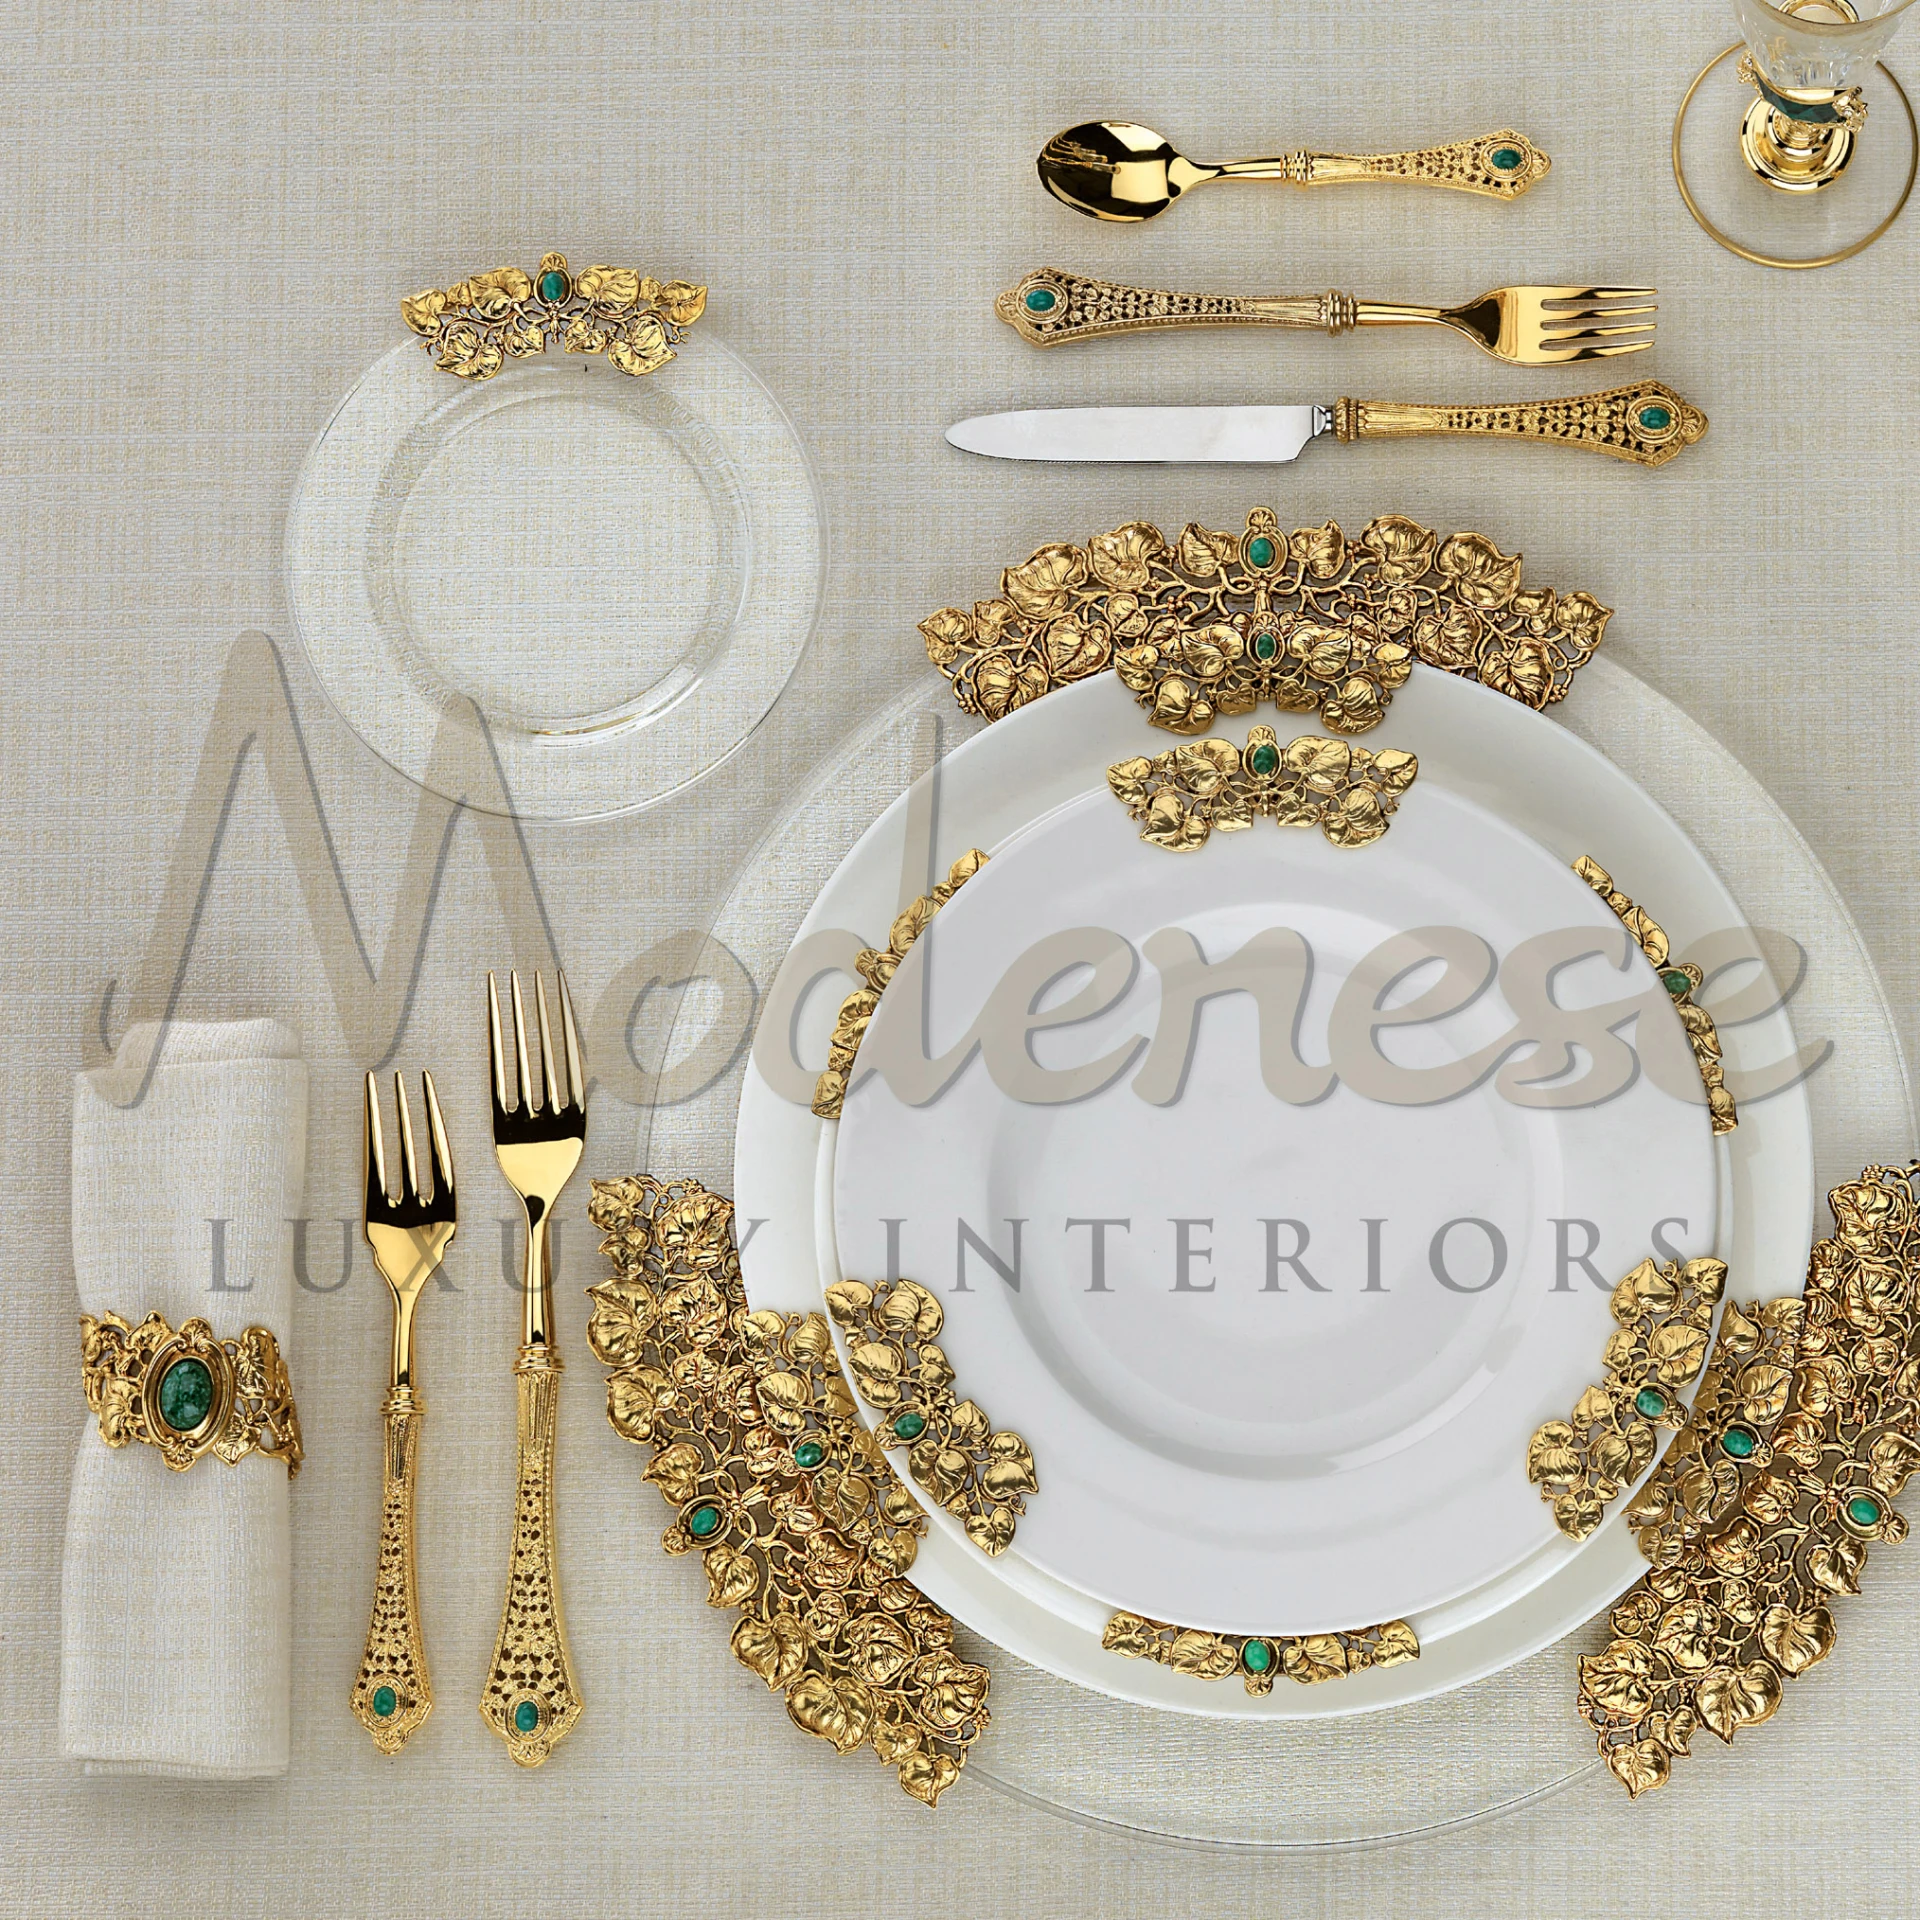 Lavish Table Arrangement with Gold-Decorated Dining Essentials